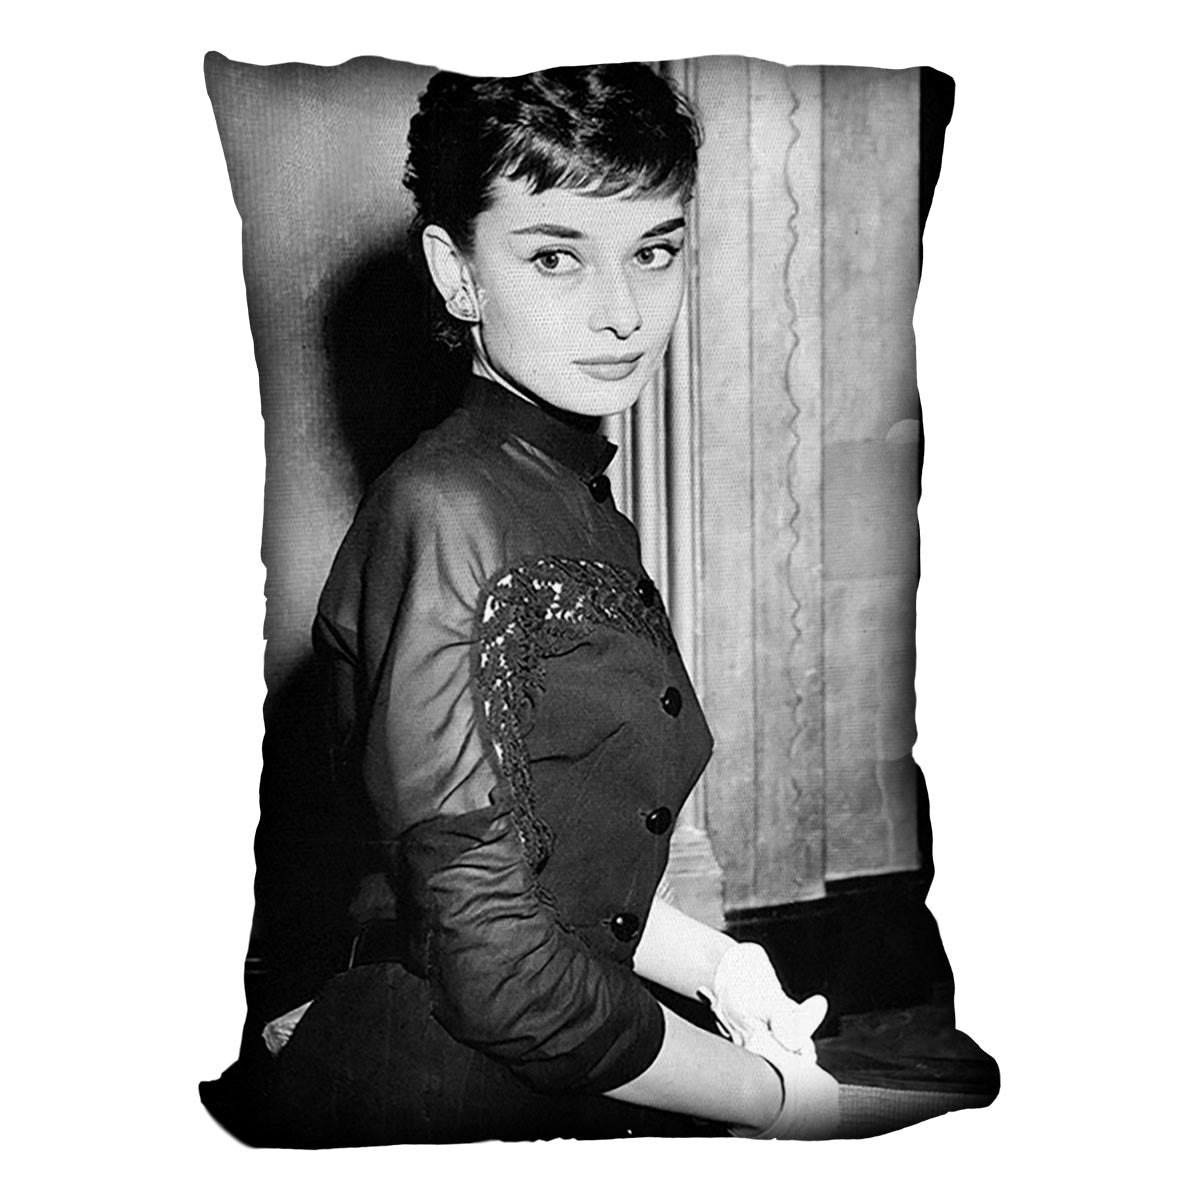 Audrey Hepburn in 1953 Cushion